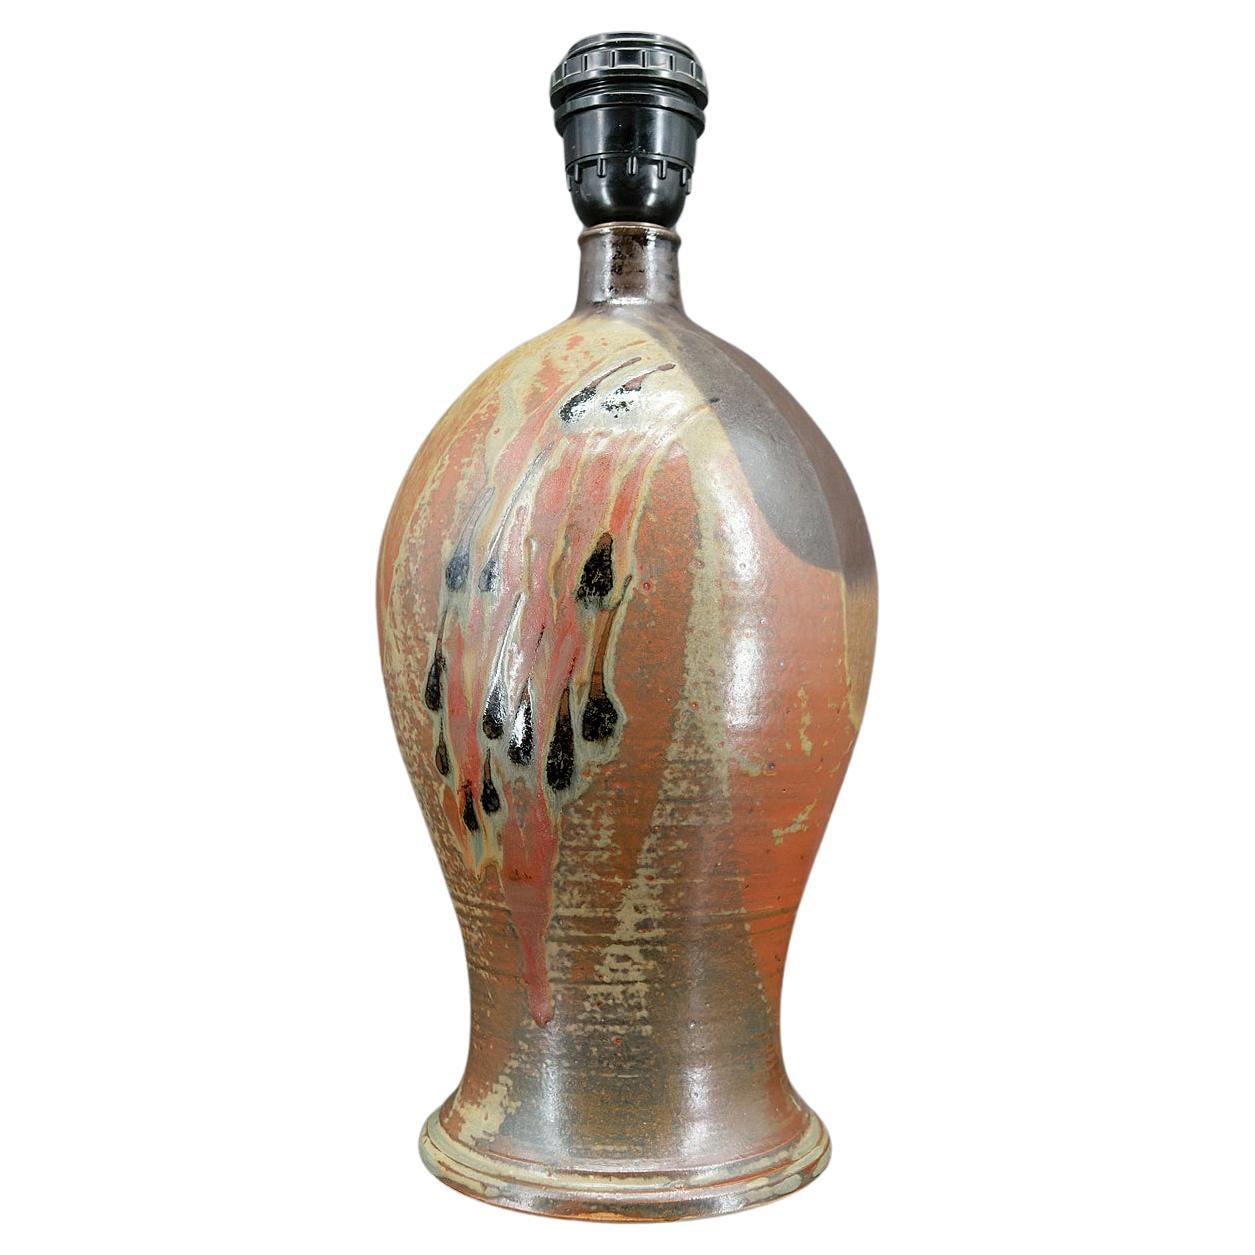 Stoneware lamp signed “Blanot”, circa 1970